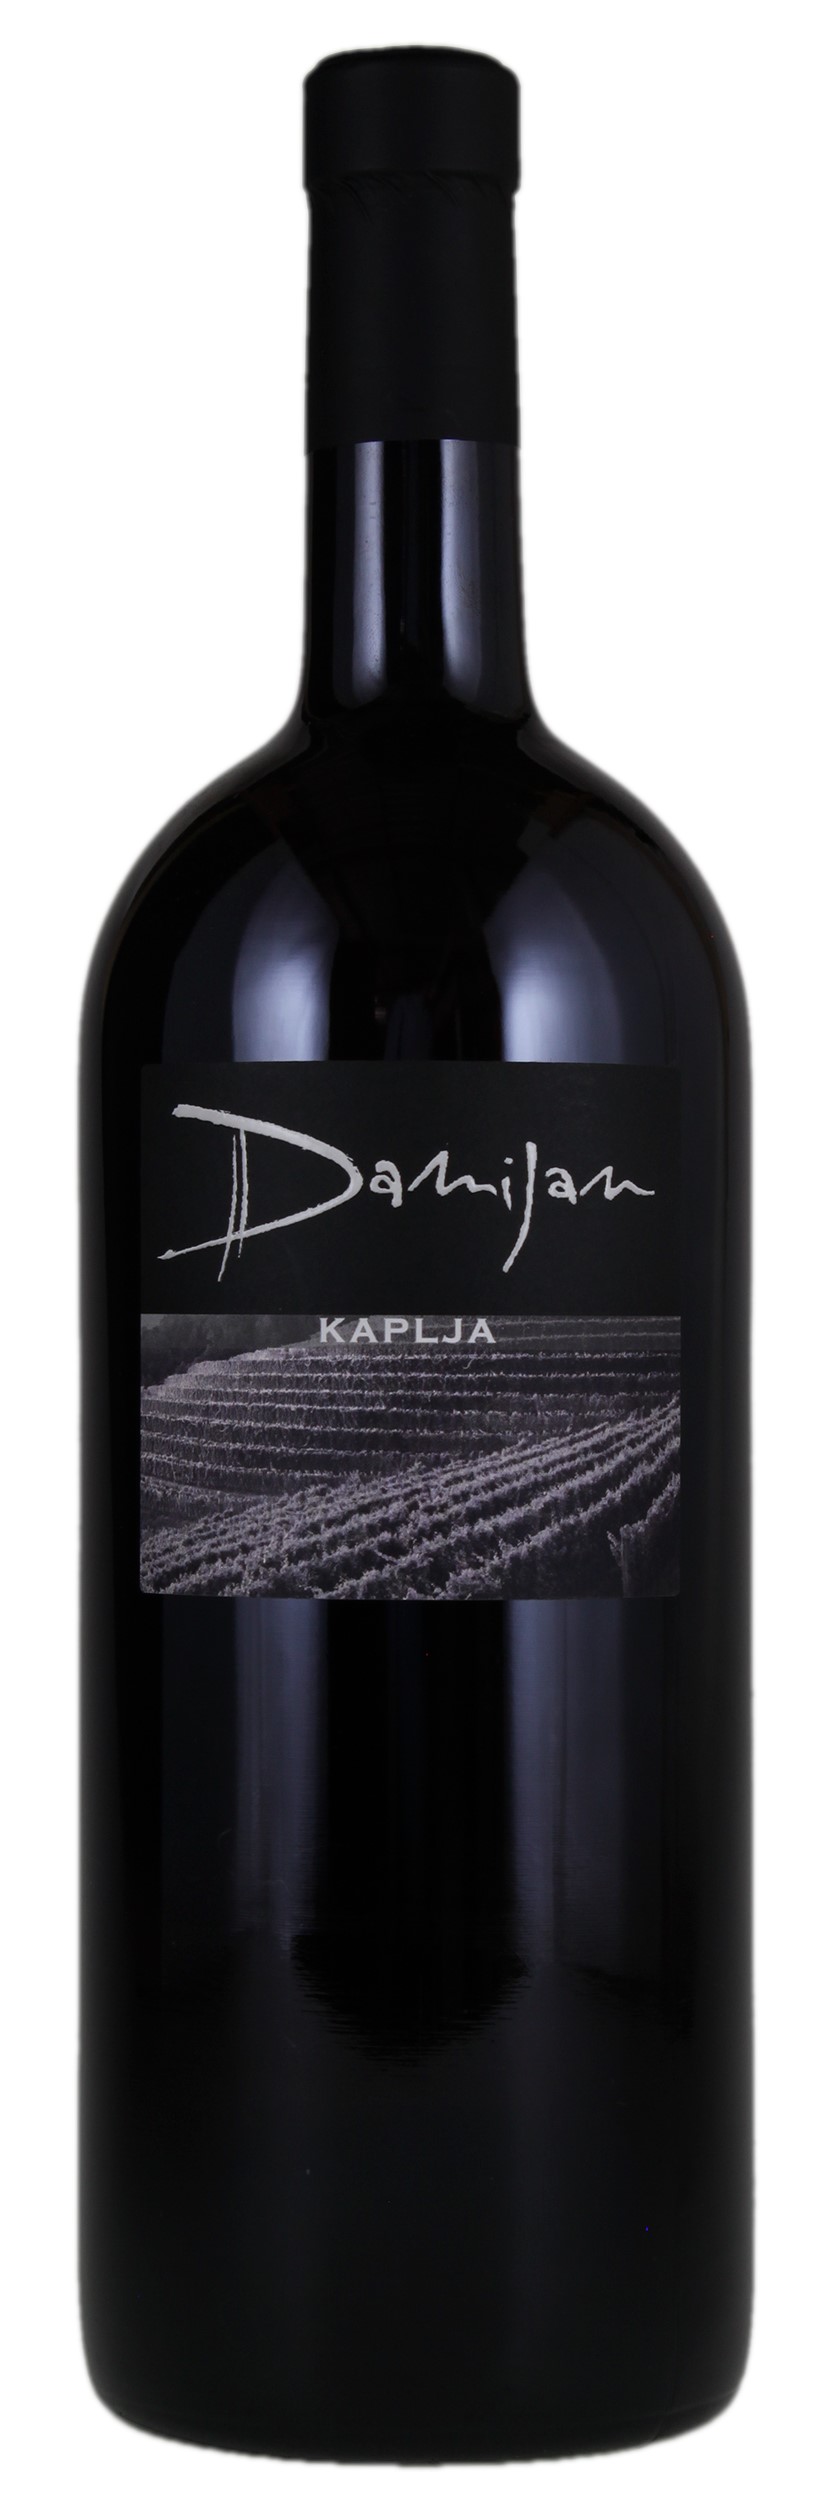 Damijan Bianco Kaplja 2009 - 认识 Orange Wine 葡萄酒 | 色泽、口感与故事